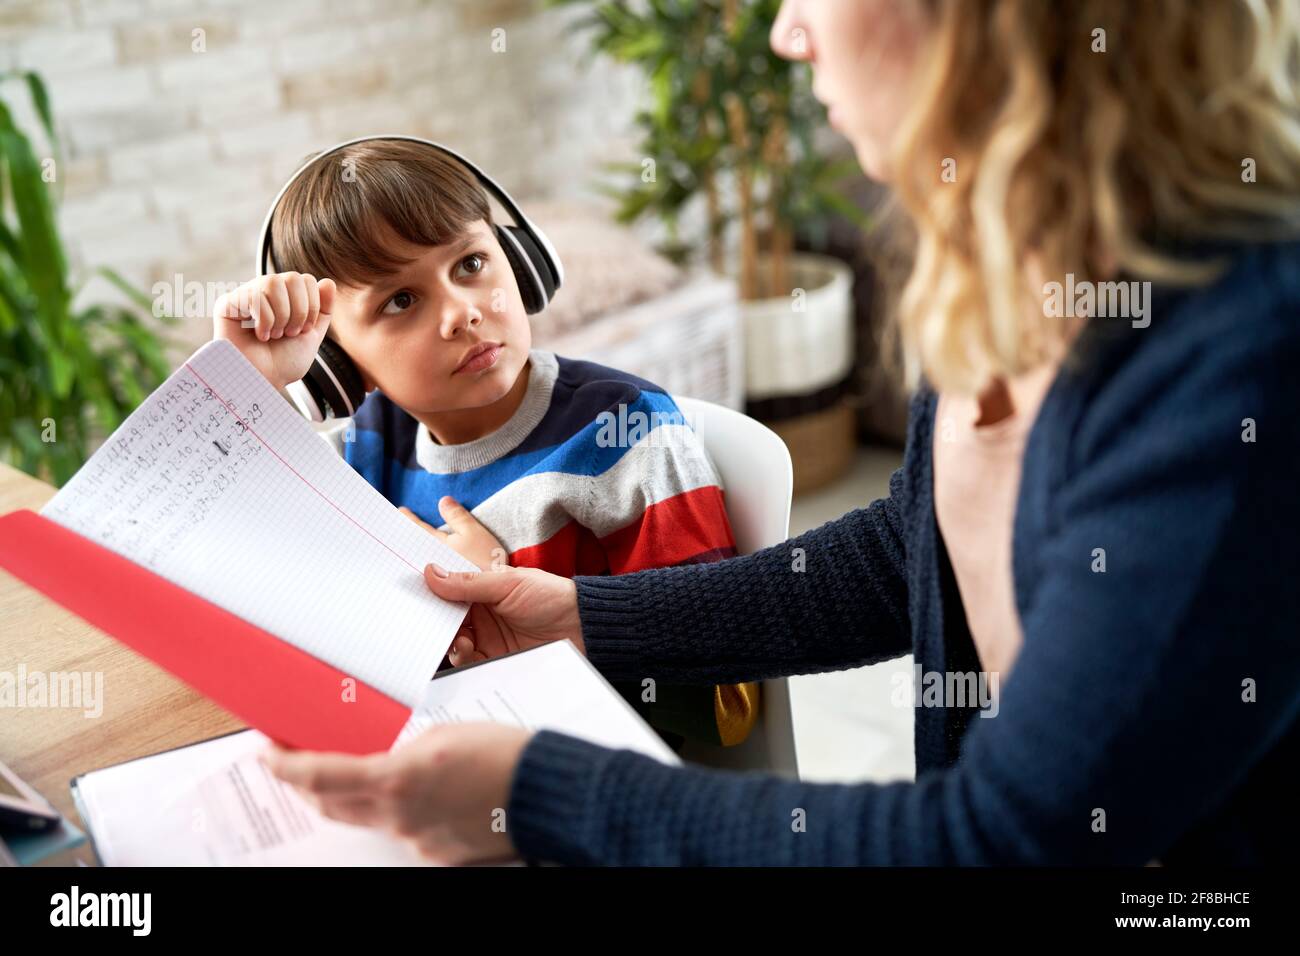 Mother checks her son's math homework Stock Photo